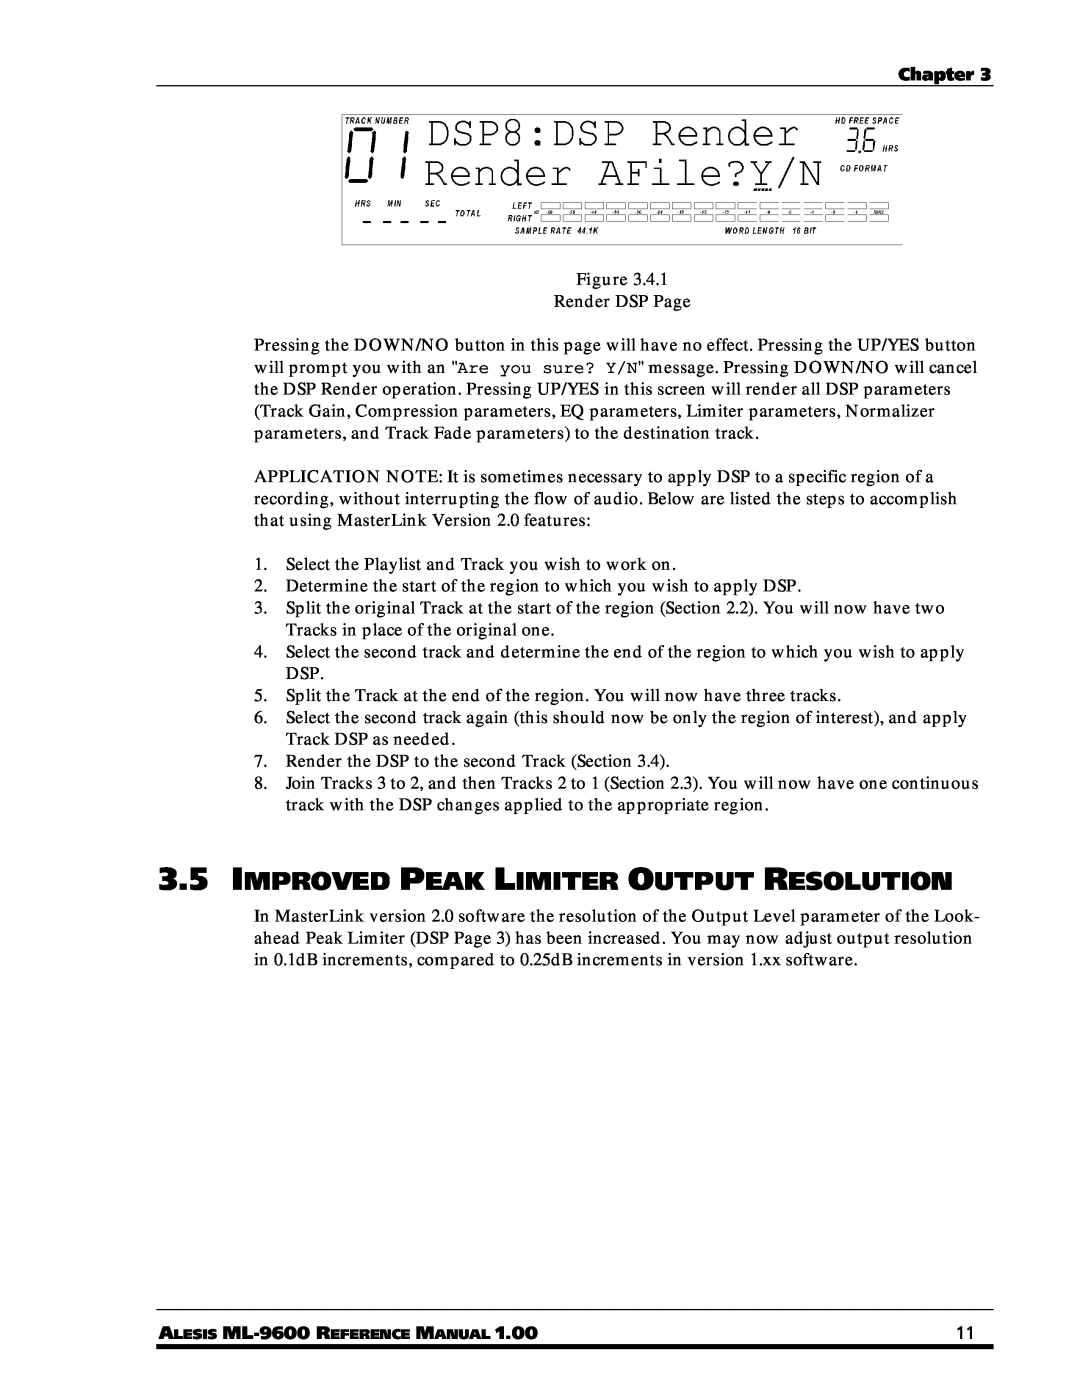 Alesis ML-9600 owner manual 3.5IMPROVED PEAK LIMITER OUTPUT RESOLUTION, Chapter 